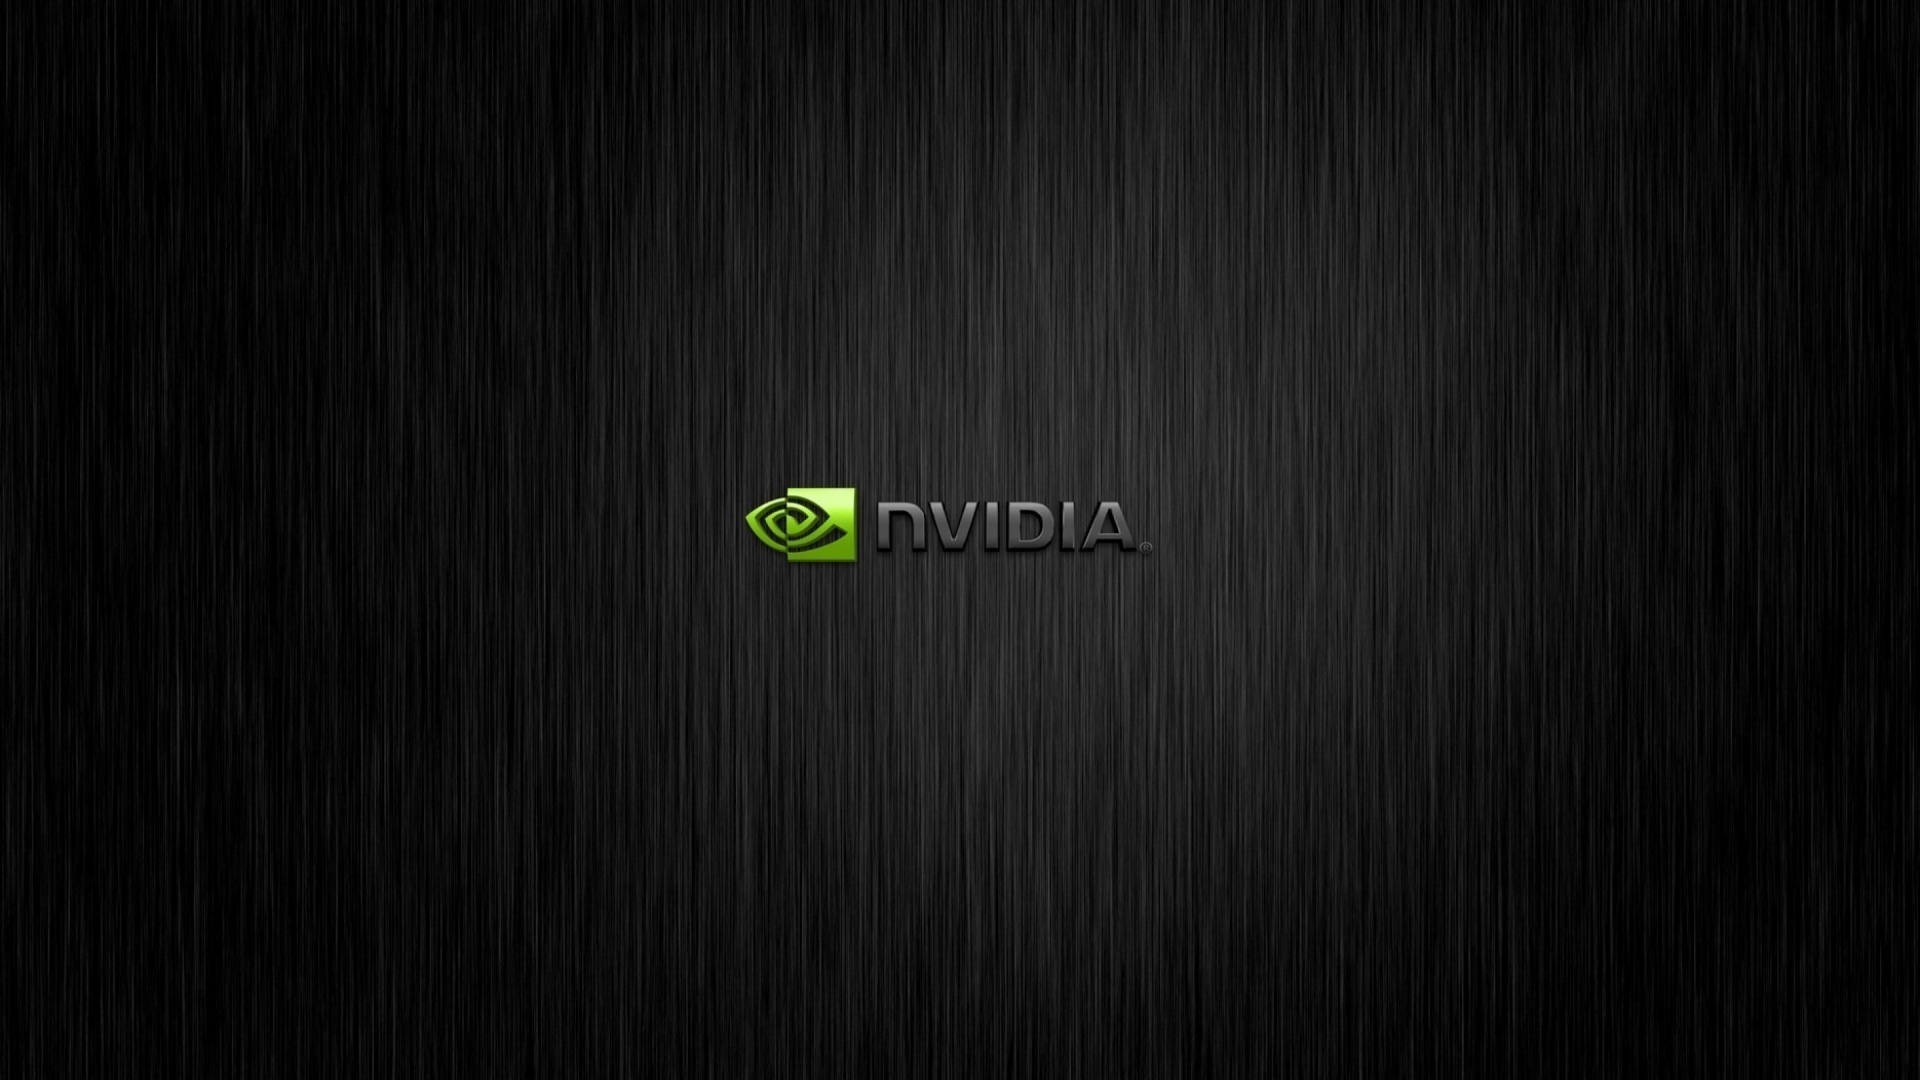 Nvidia Logo Black HD Desktop Mobile Wallpaper Background 9walls